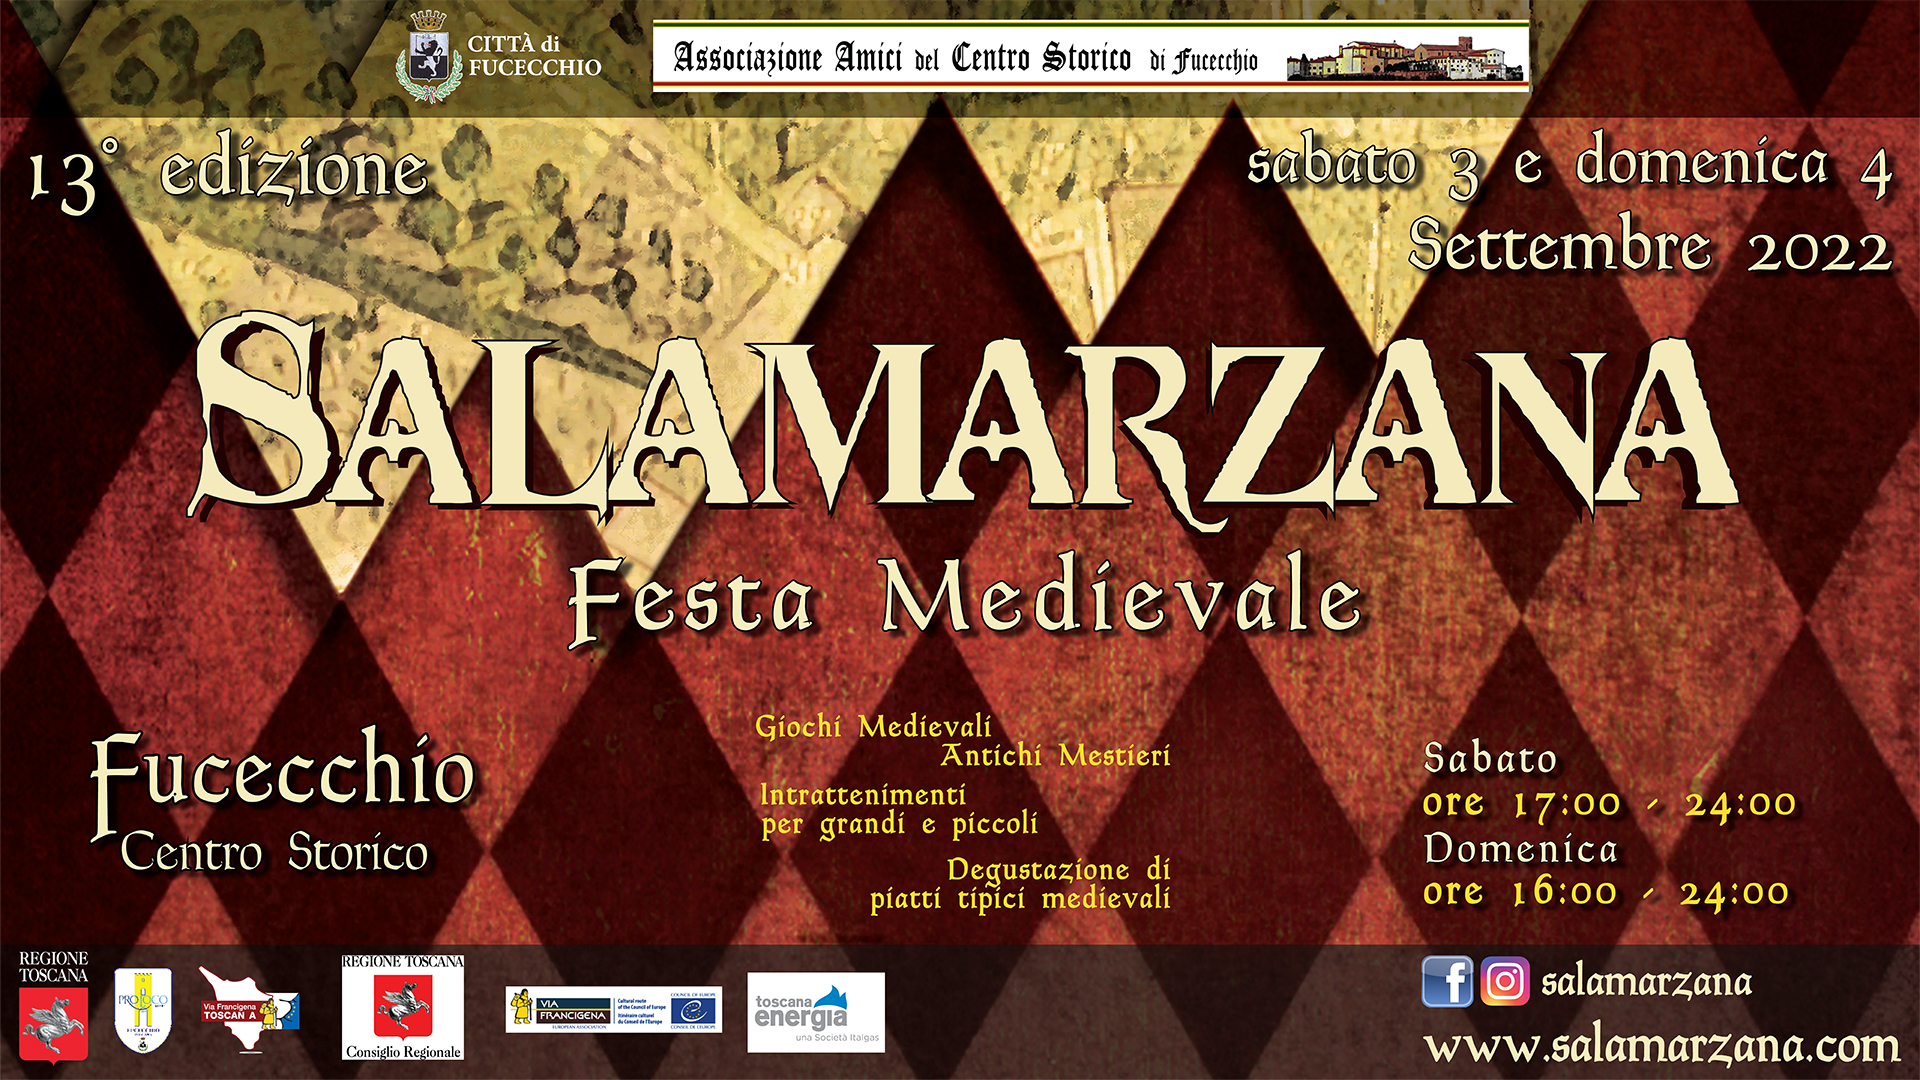 Salamarzana 2022, festa medievale